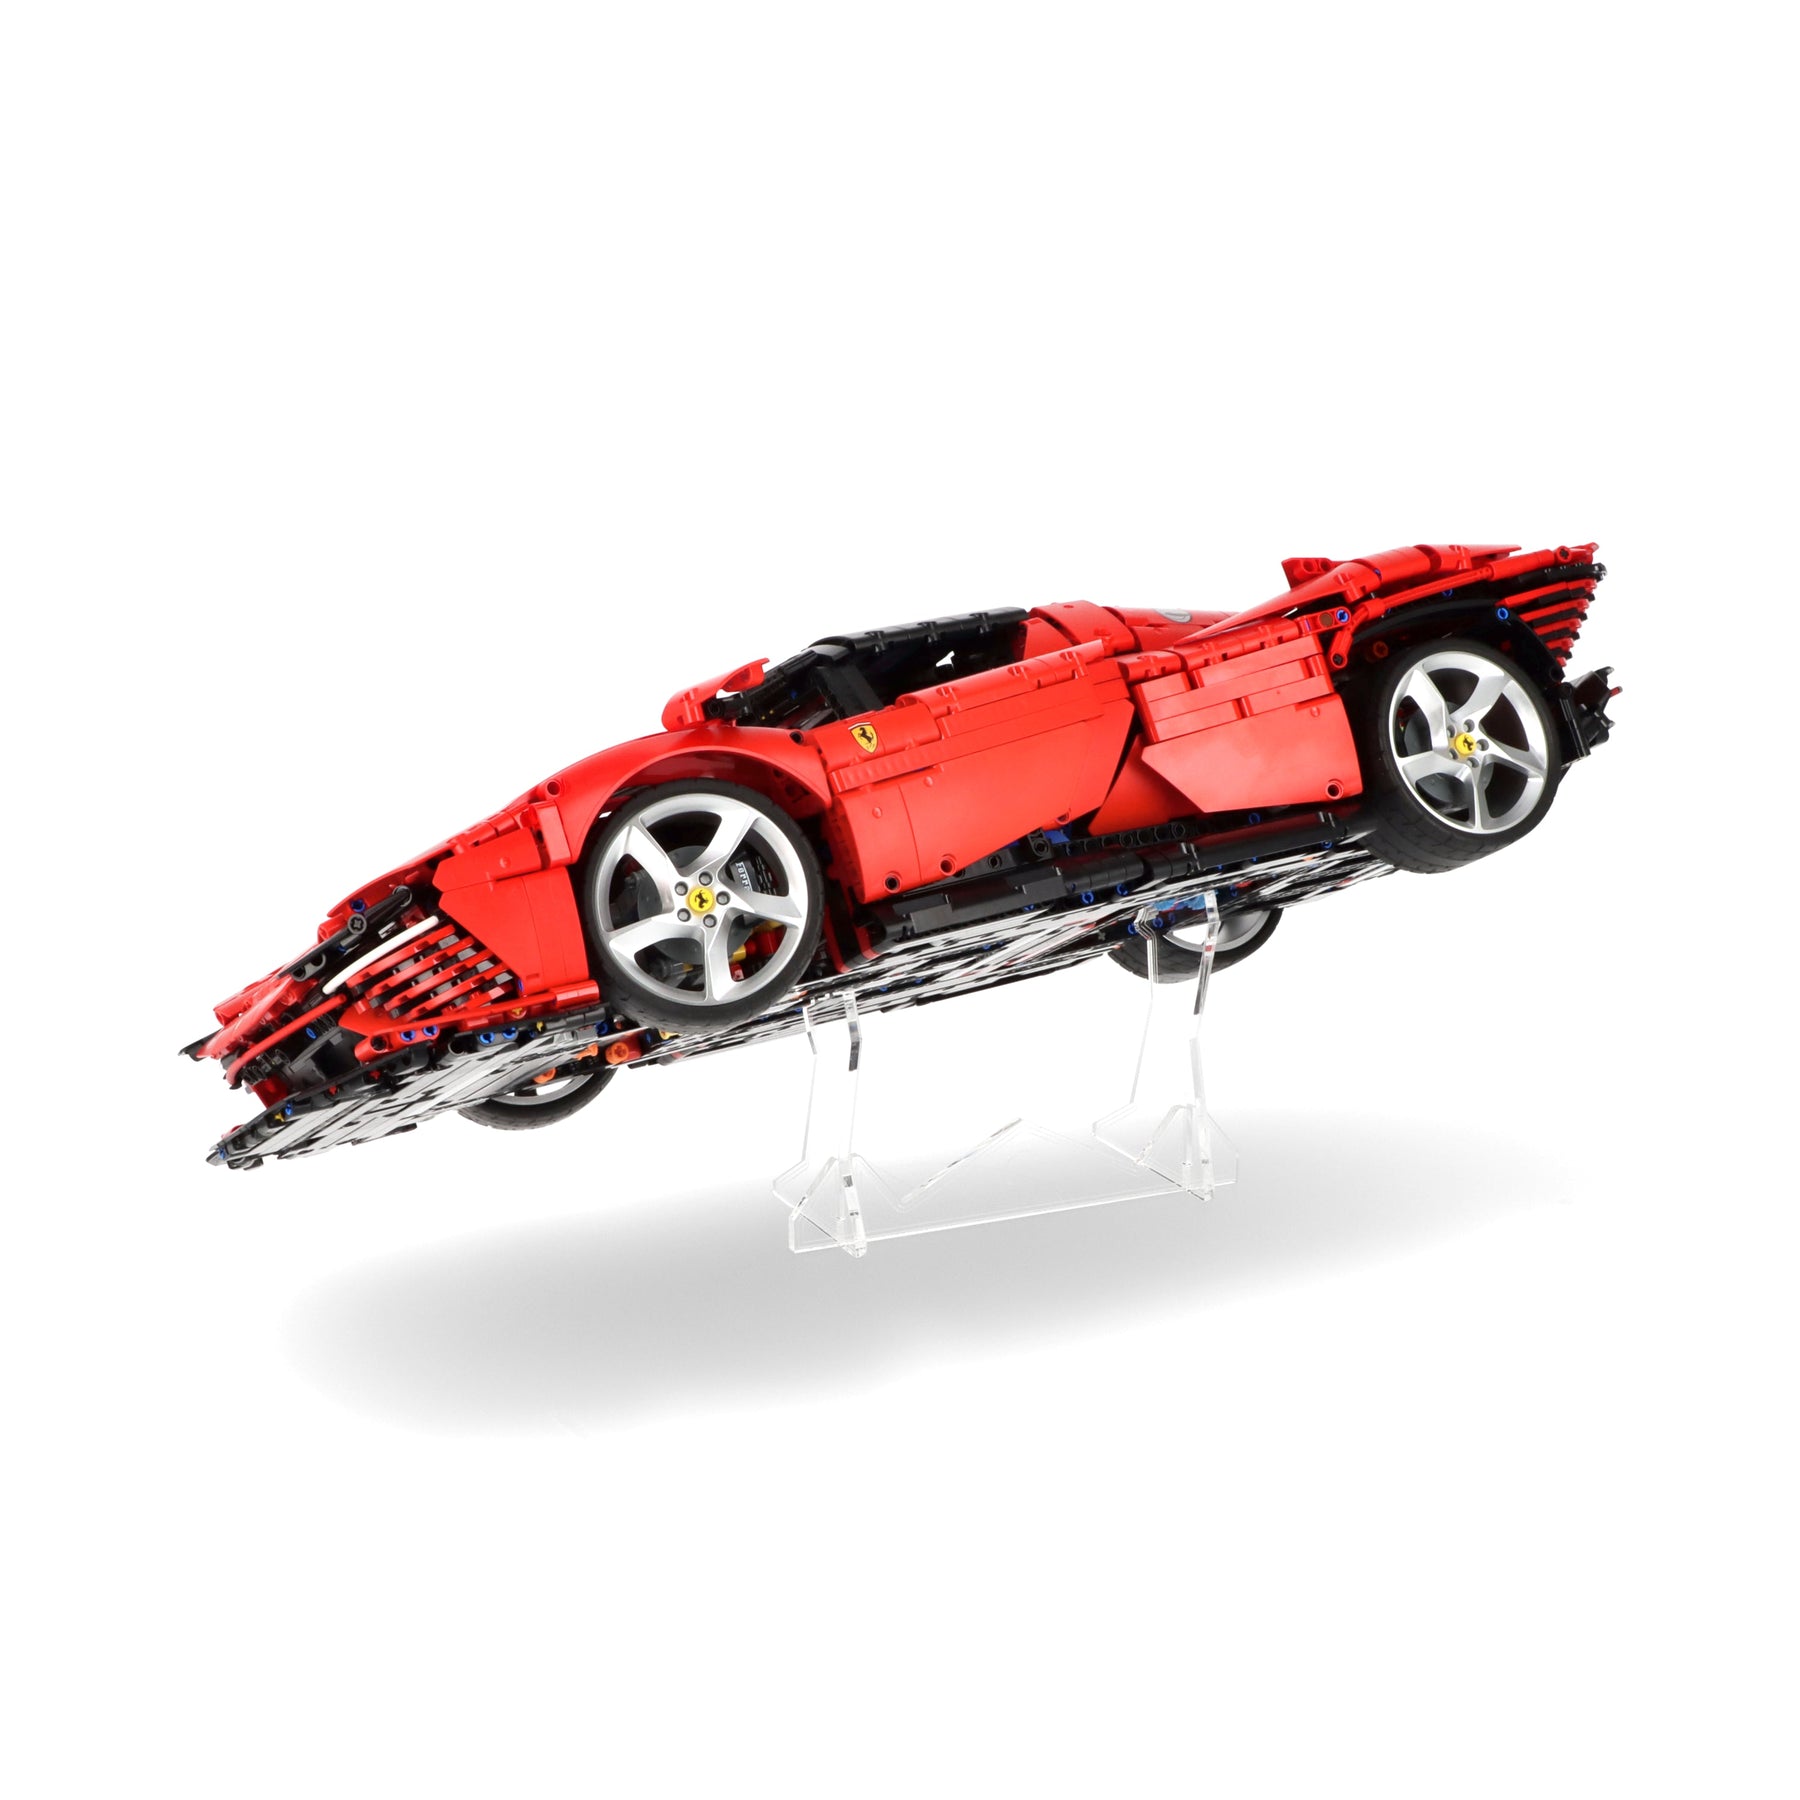 LEGO Ferrari Daytona SP3 42143 Display Stand